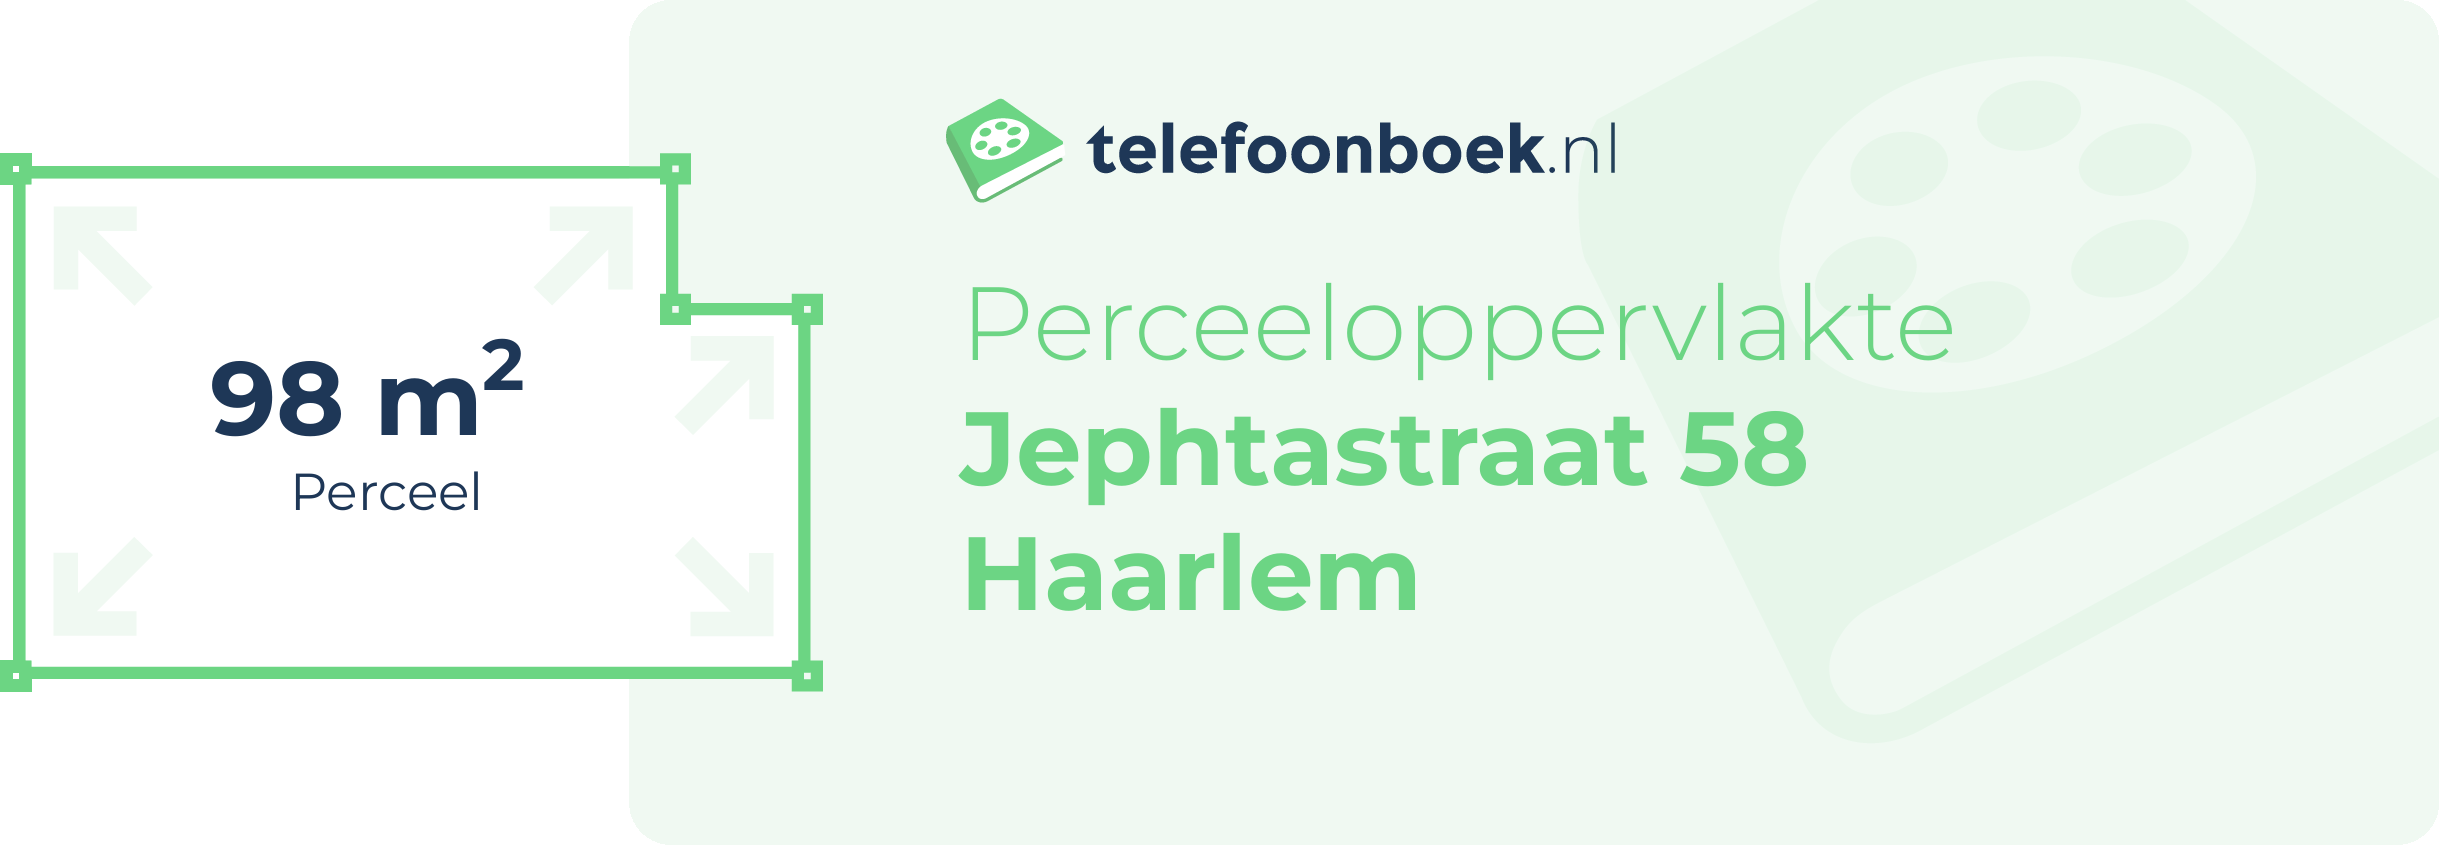 Perceeloppervlakte Jephtastraat 58 Haarlem